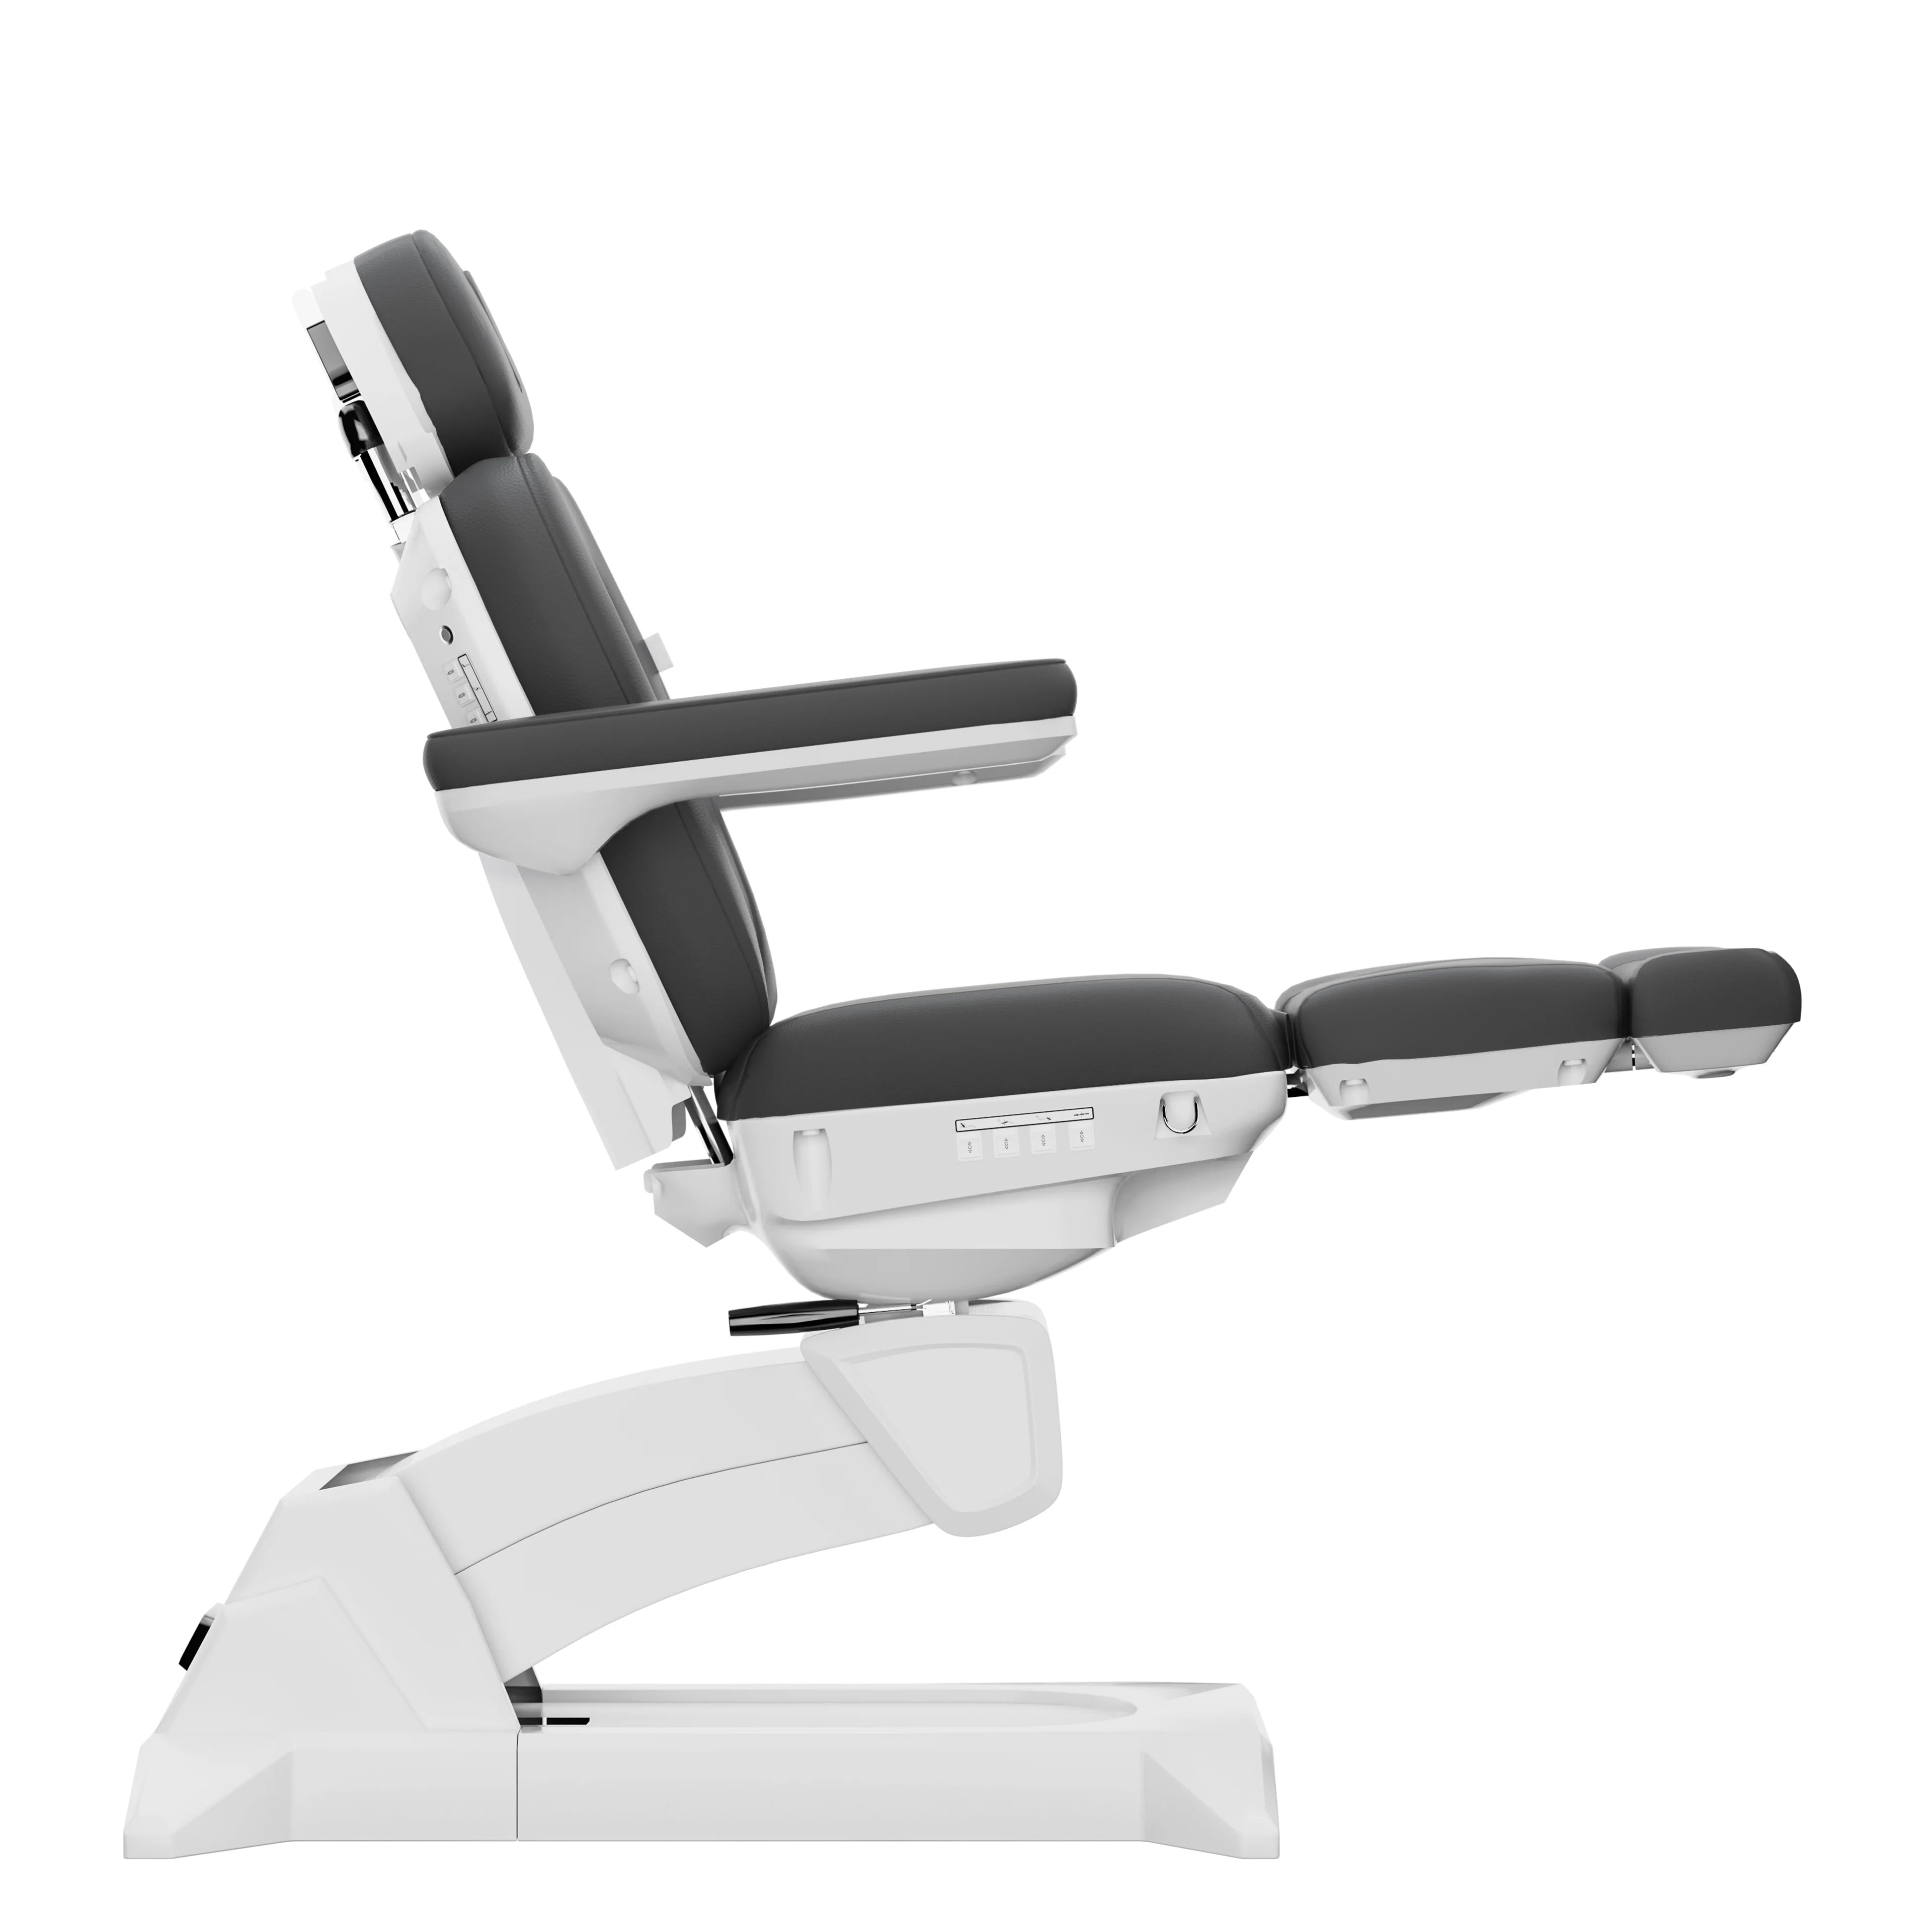 SpaMarc . Ultera (Gray) . Rotating . 4 Motor Spa Treatment Chair/Bed